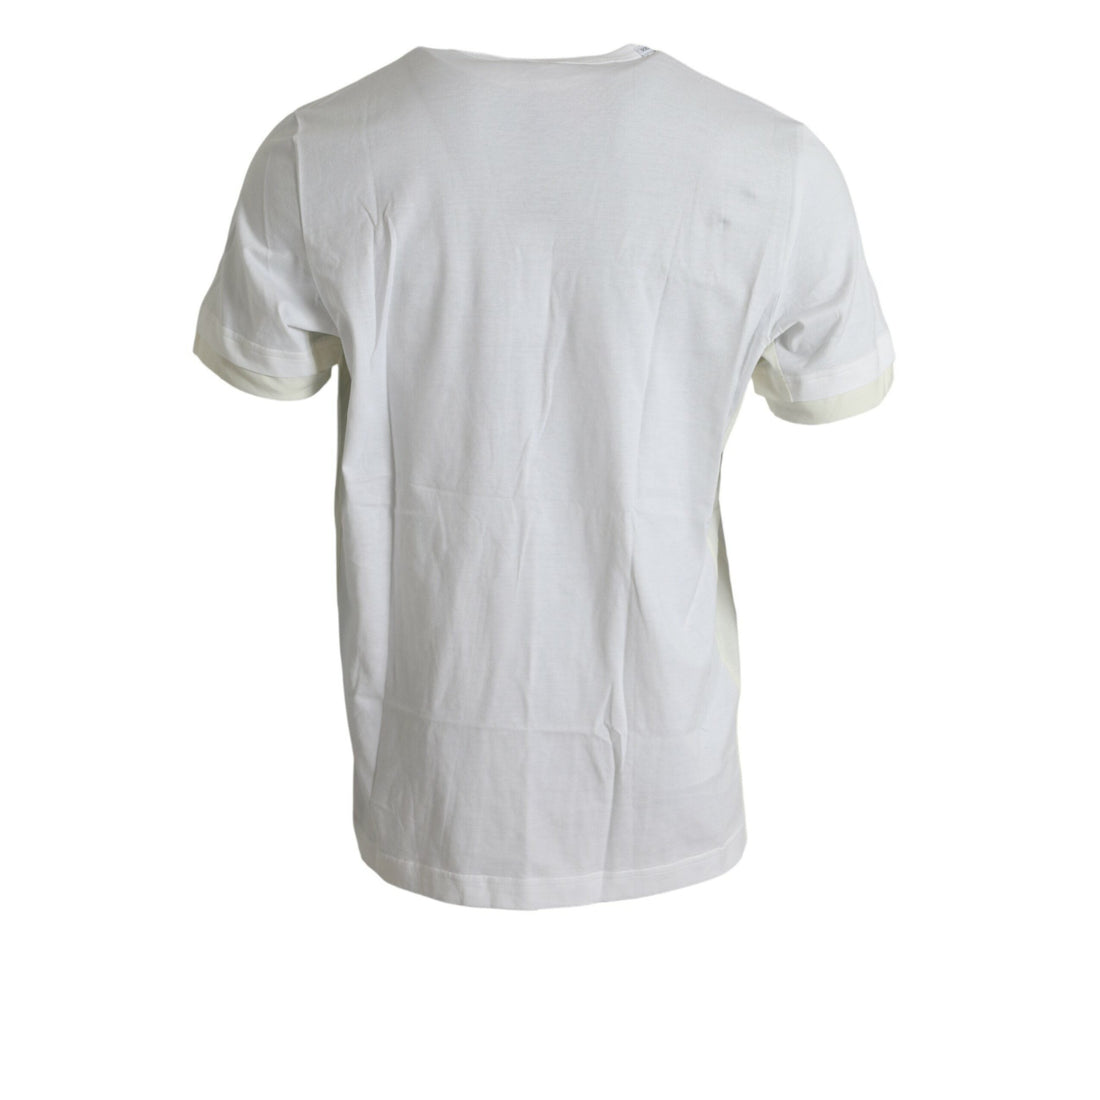 Dolce & Gabbana White Cotton Pocket Short Sleeves T-shirt